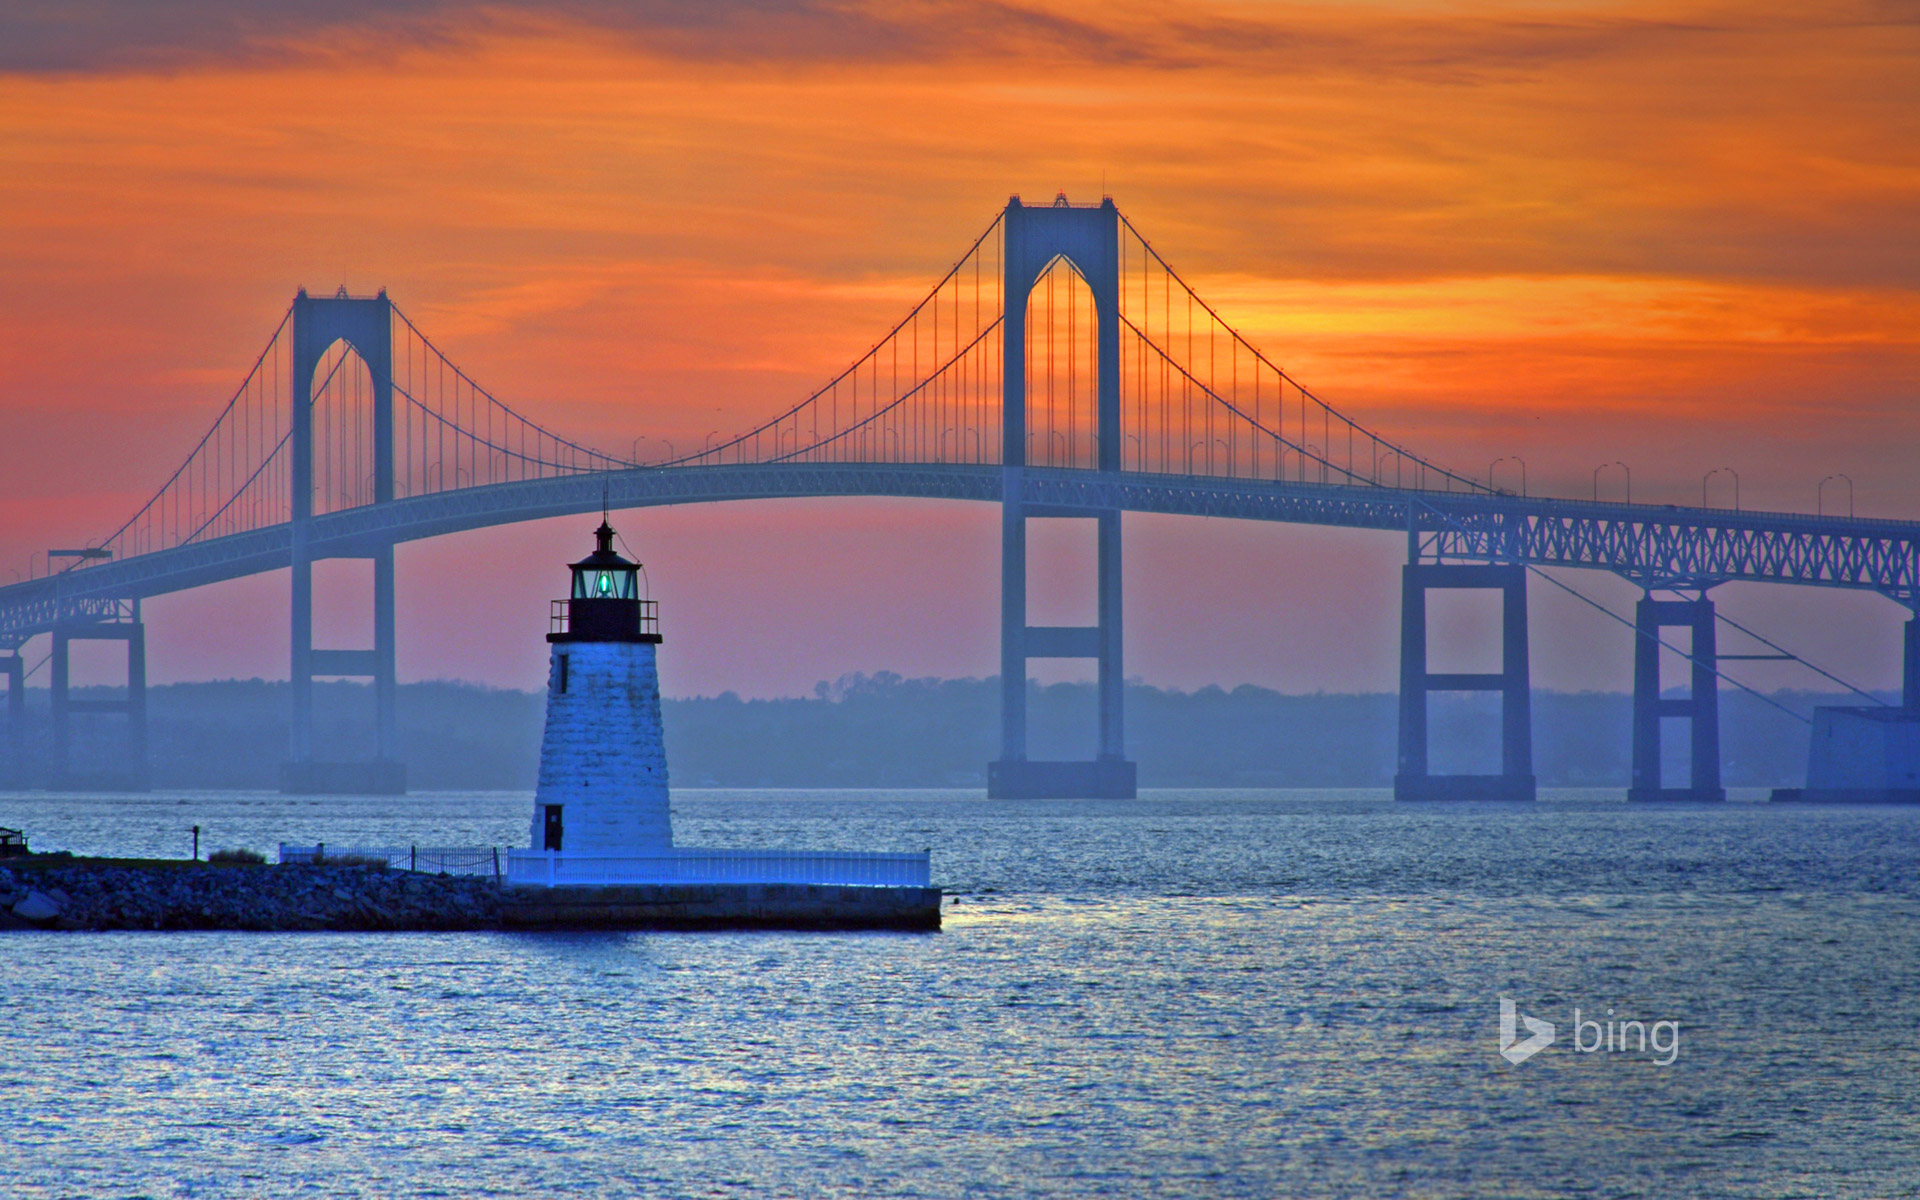 Claiborne Pell Newport Bridge and Newport Harbor Light in Newport, Rhode Island